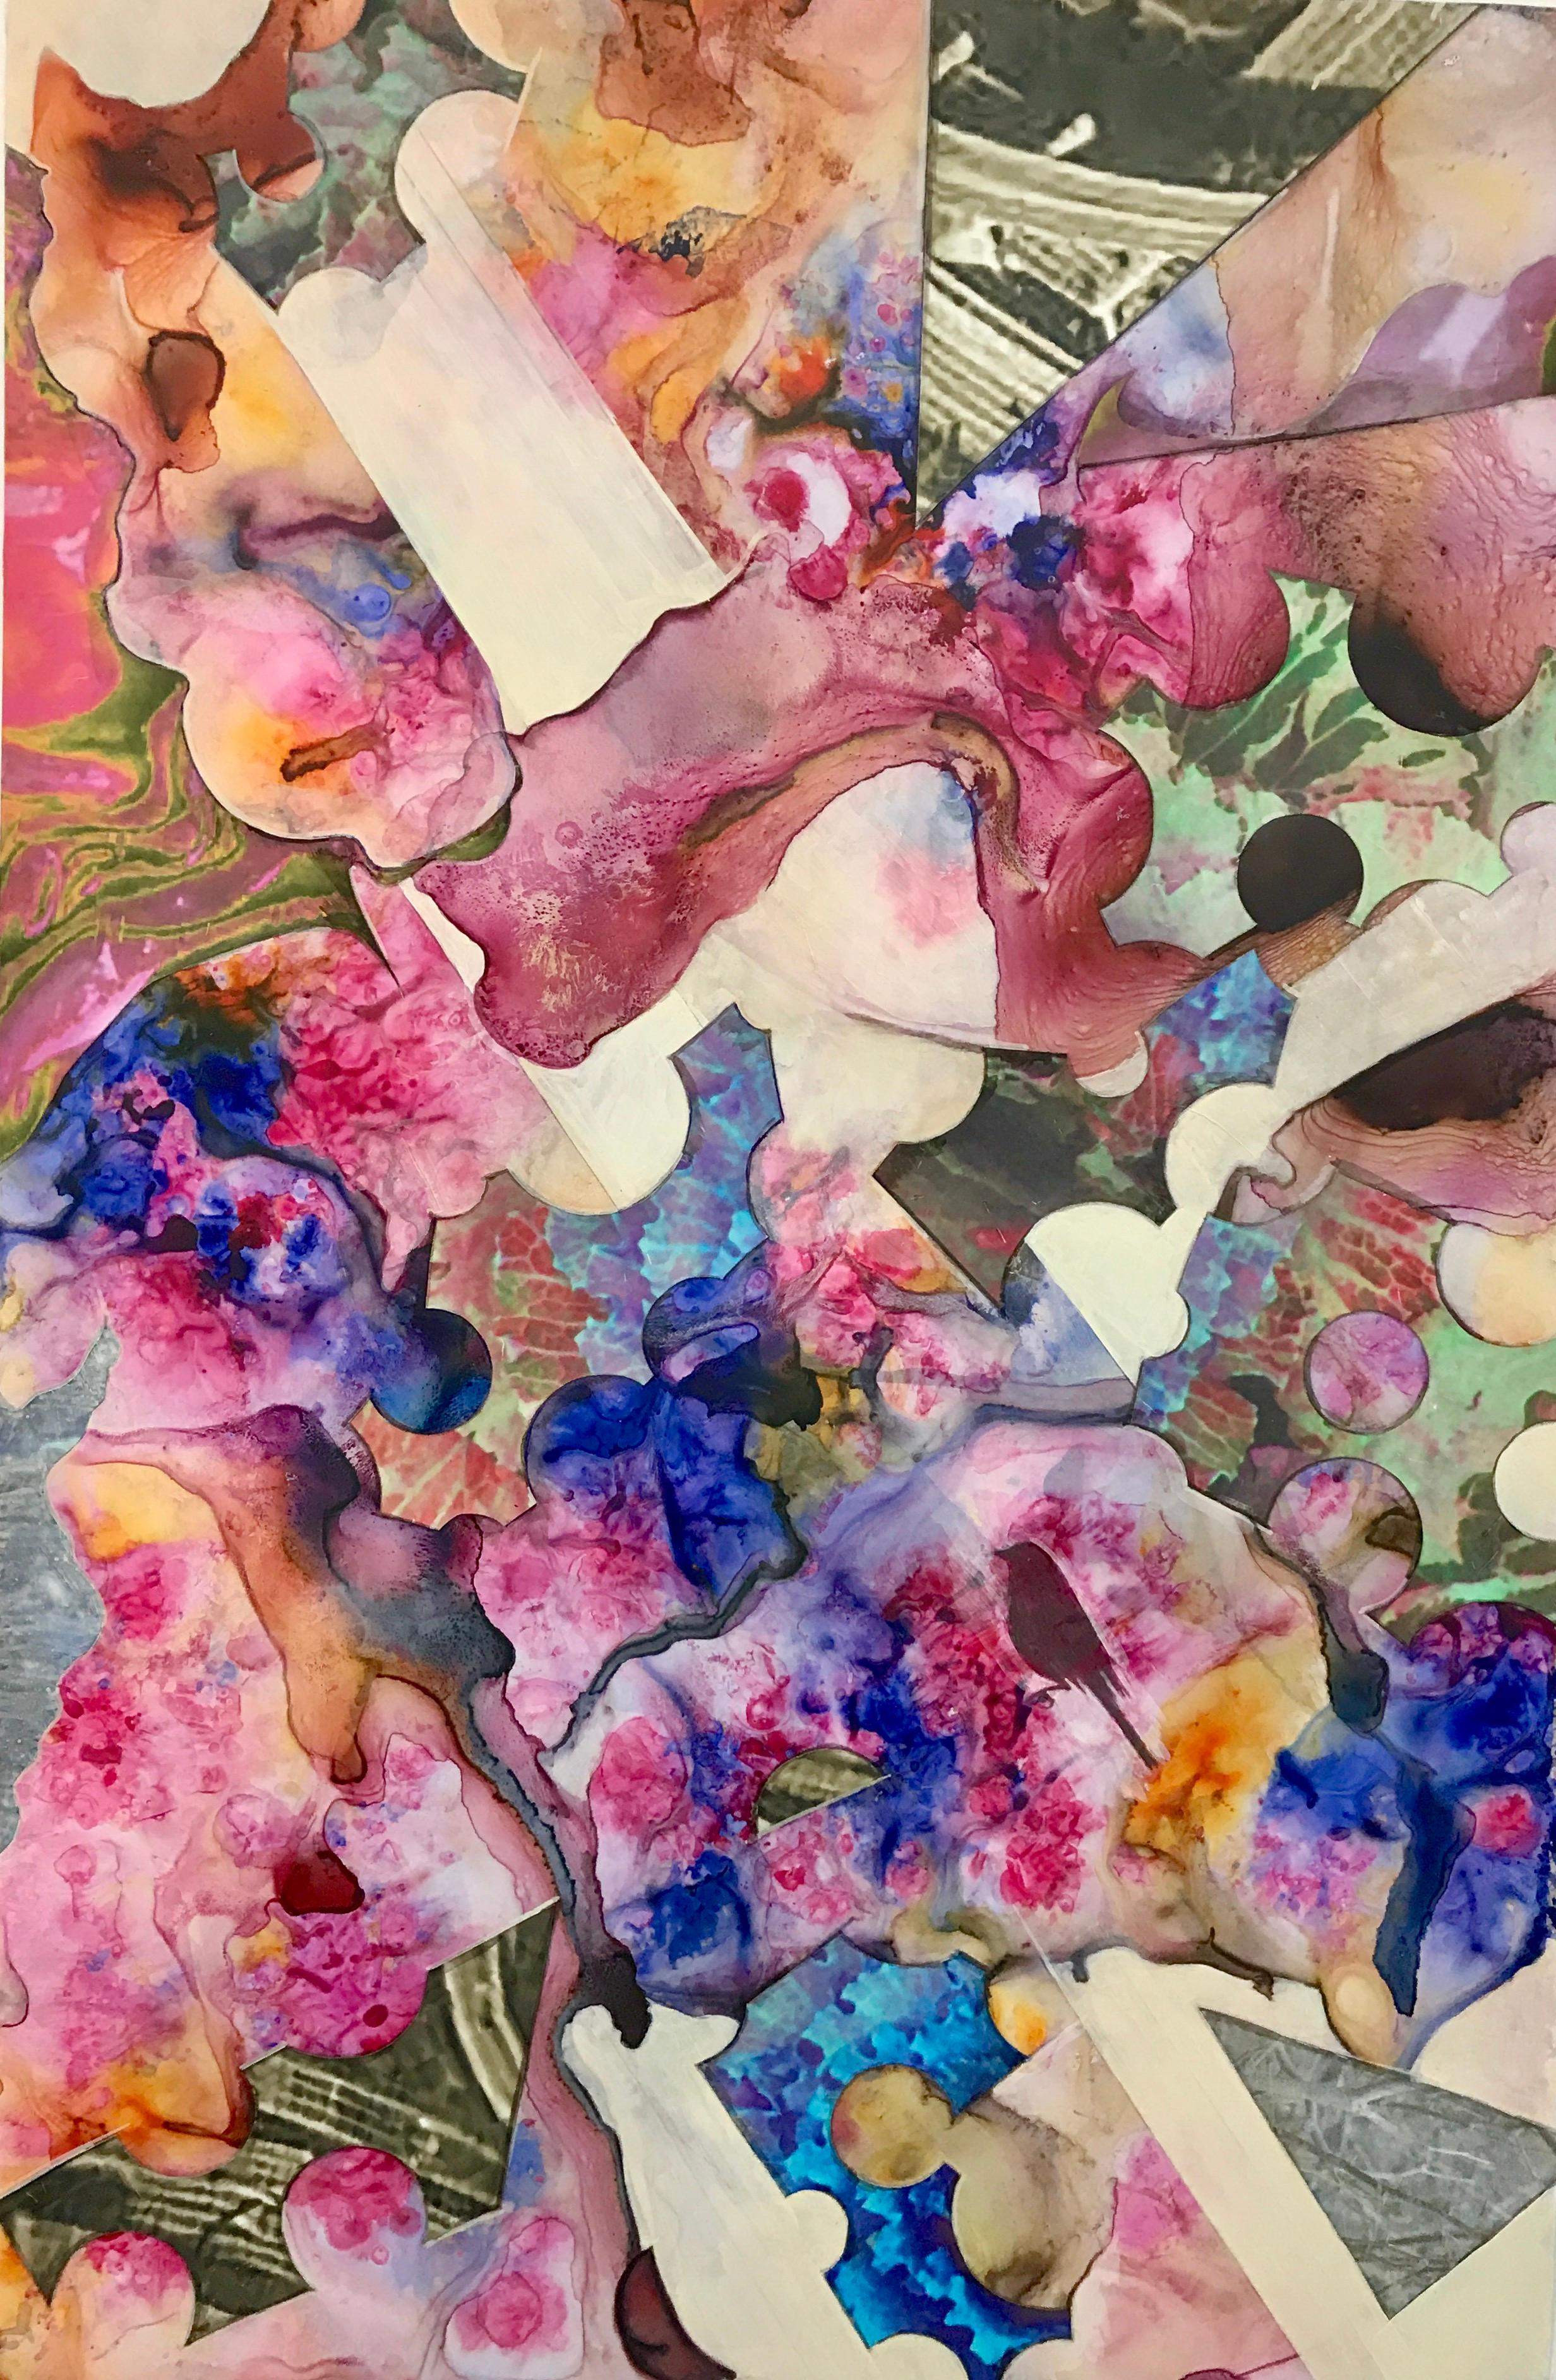 Animal Painting Barbara Strasen - Jam Traffic, pièce en techniques mixtes abstraites rose vif et violette